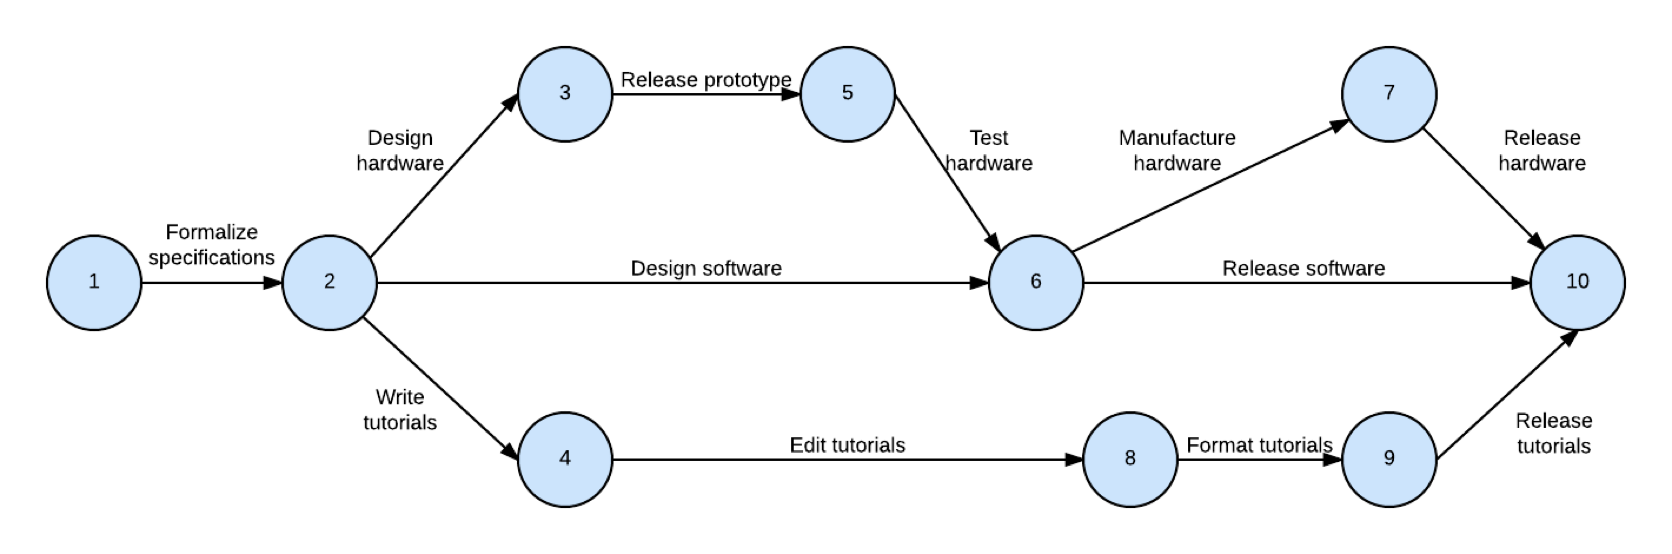 Pert Chart Software Engineering